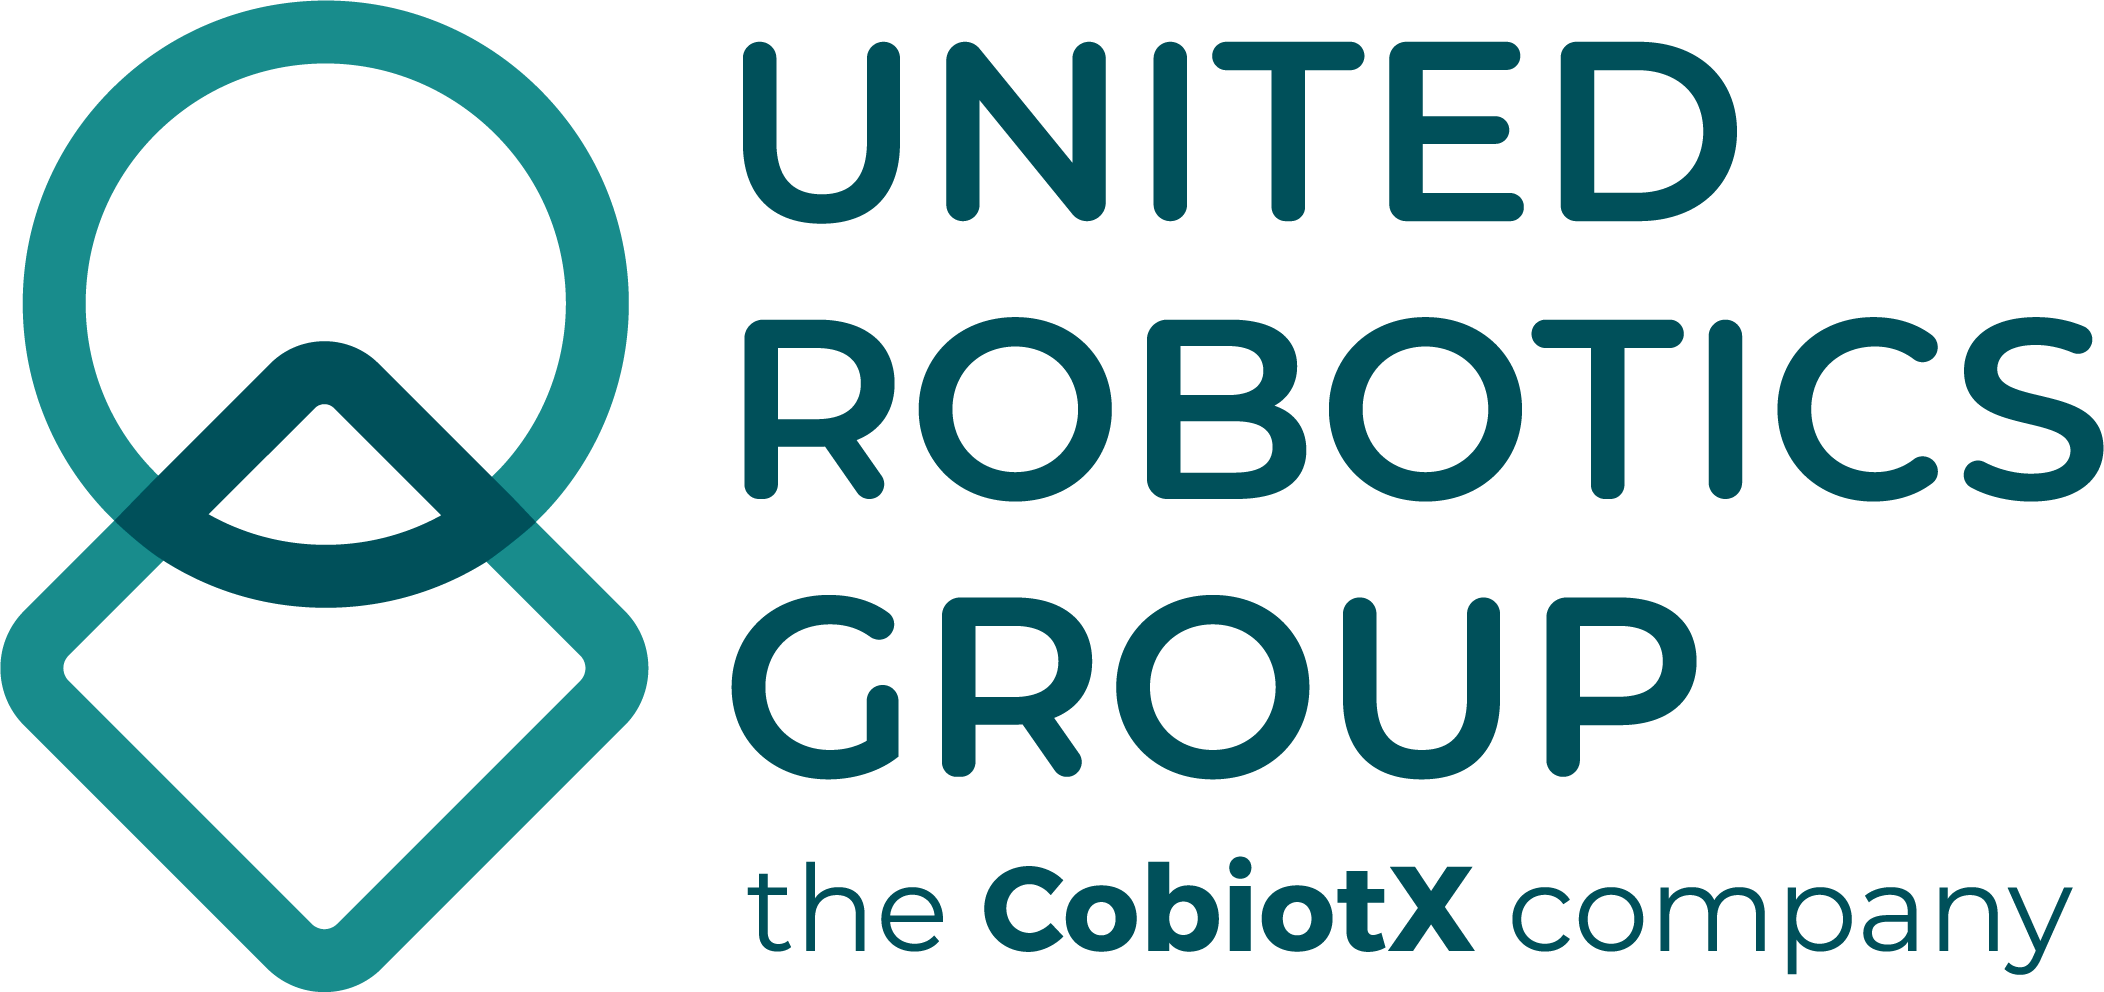 united robotics group logo